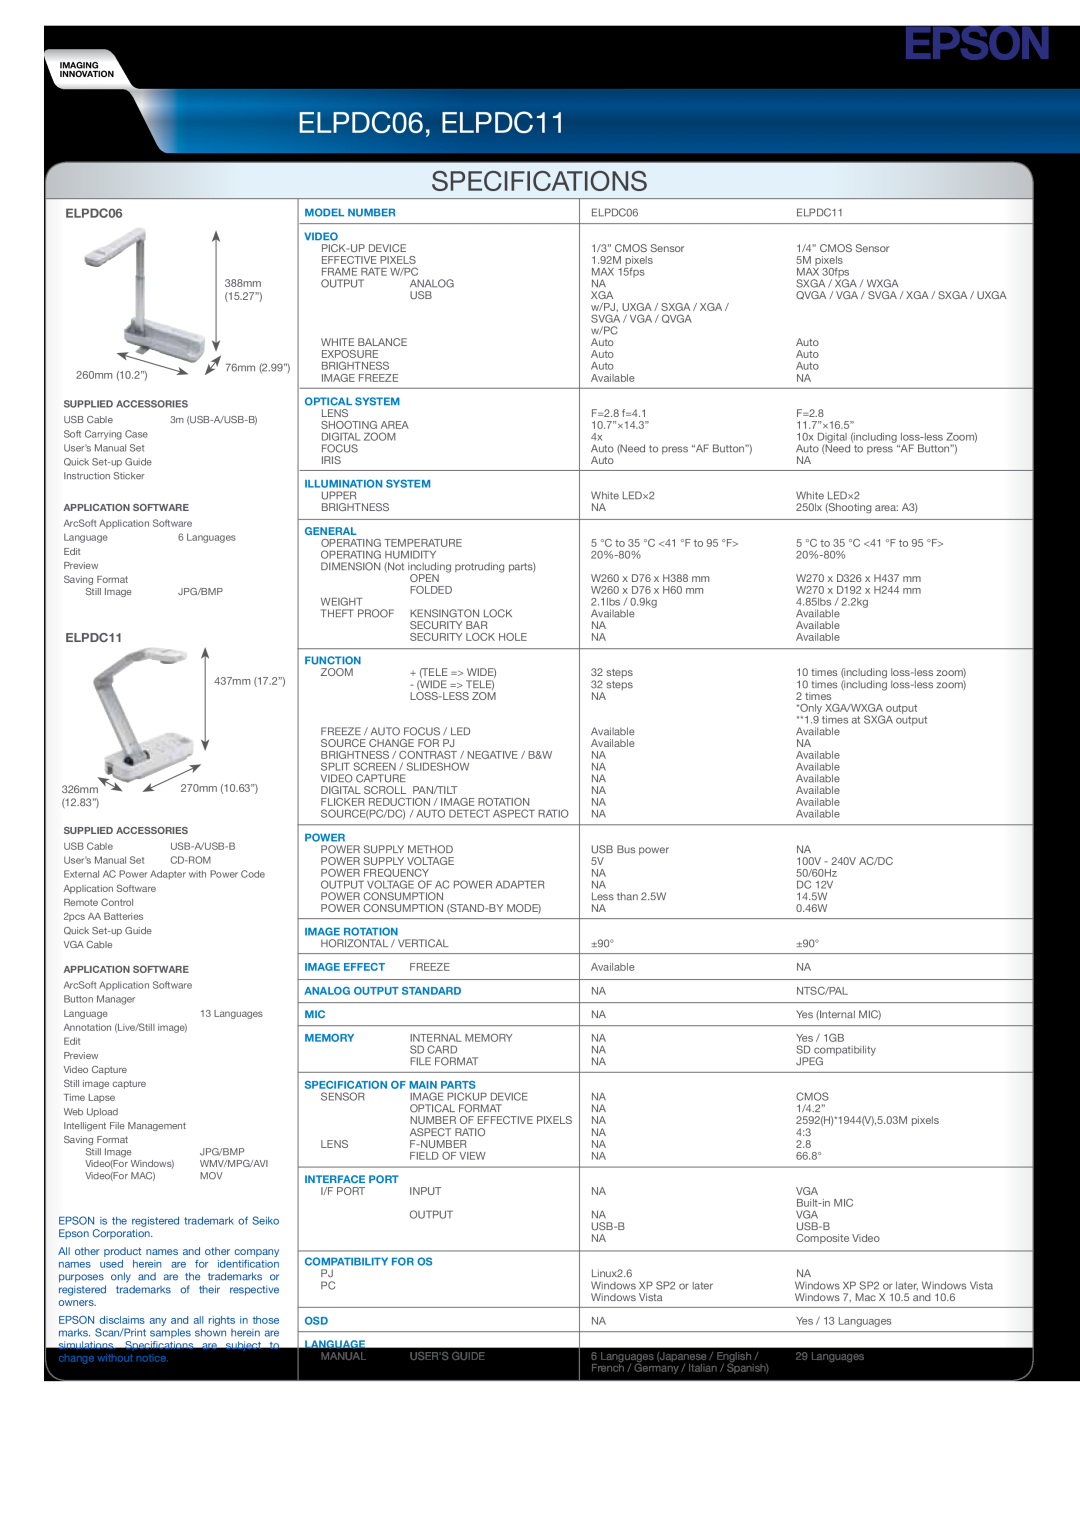 Epson ELPIU01 manual ELPDC06, ELPDC11, Specifications 